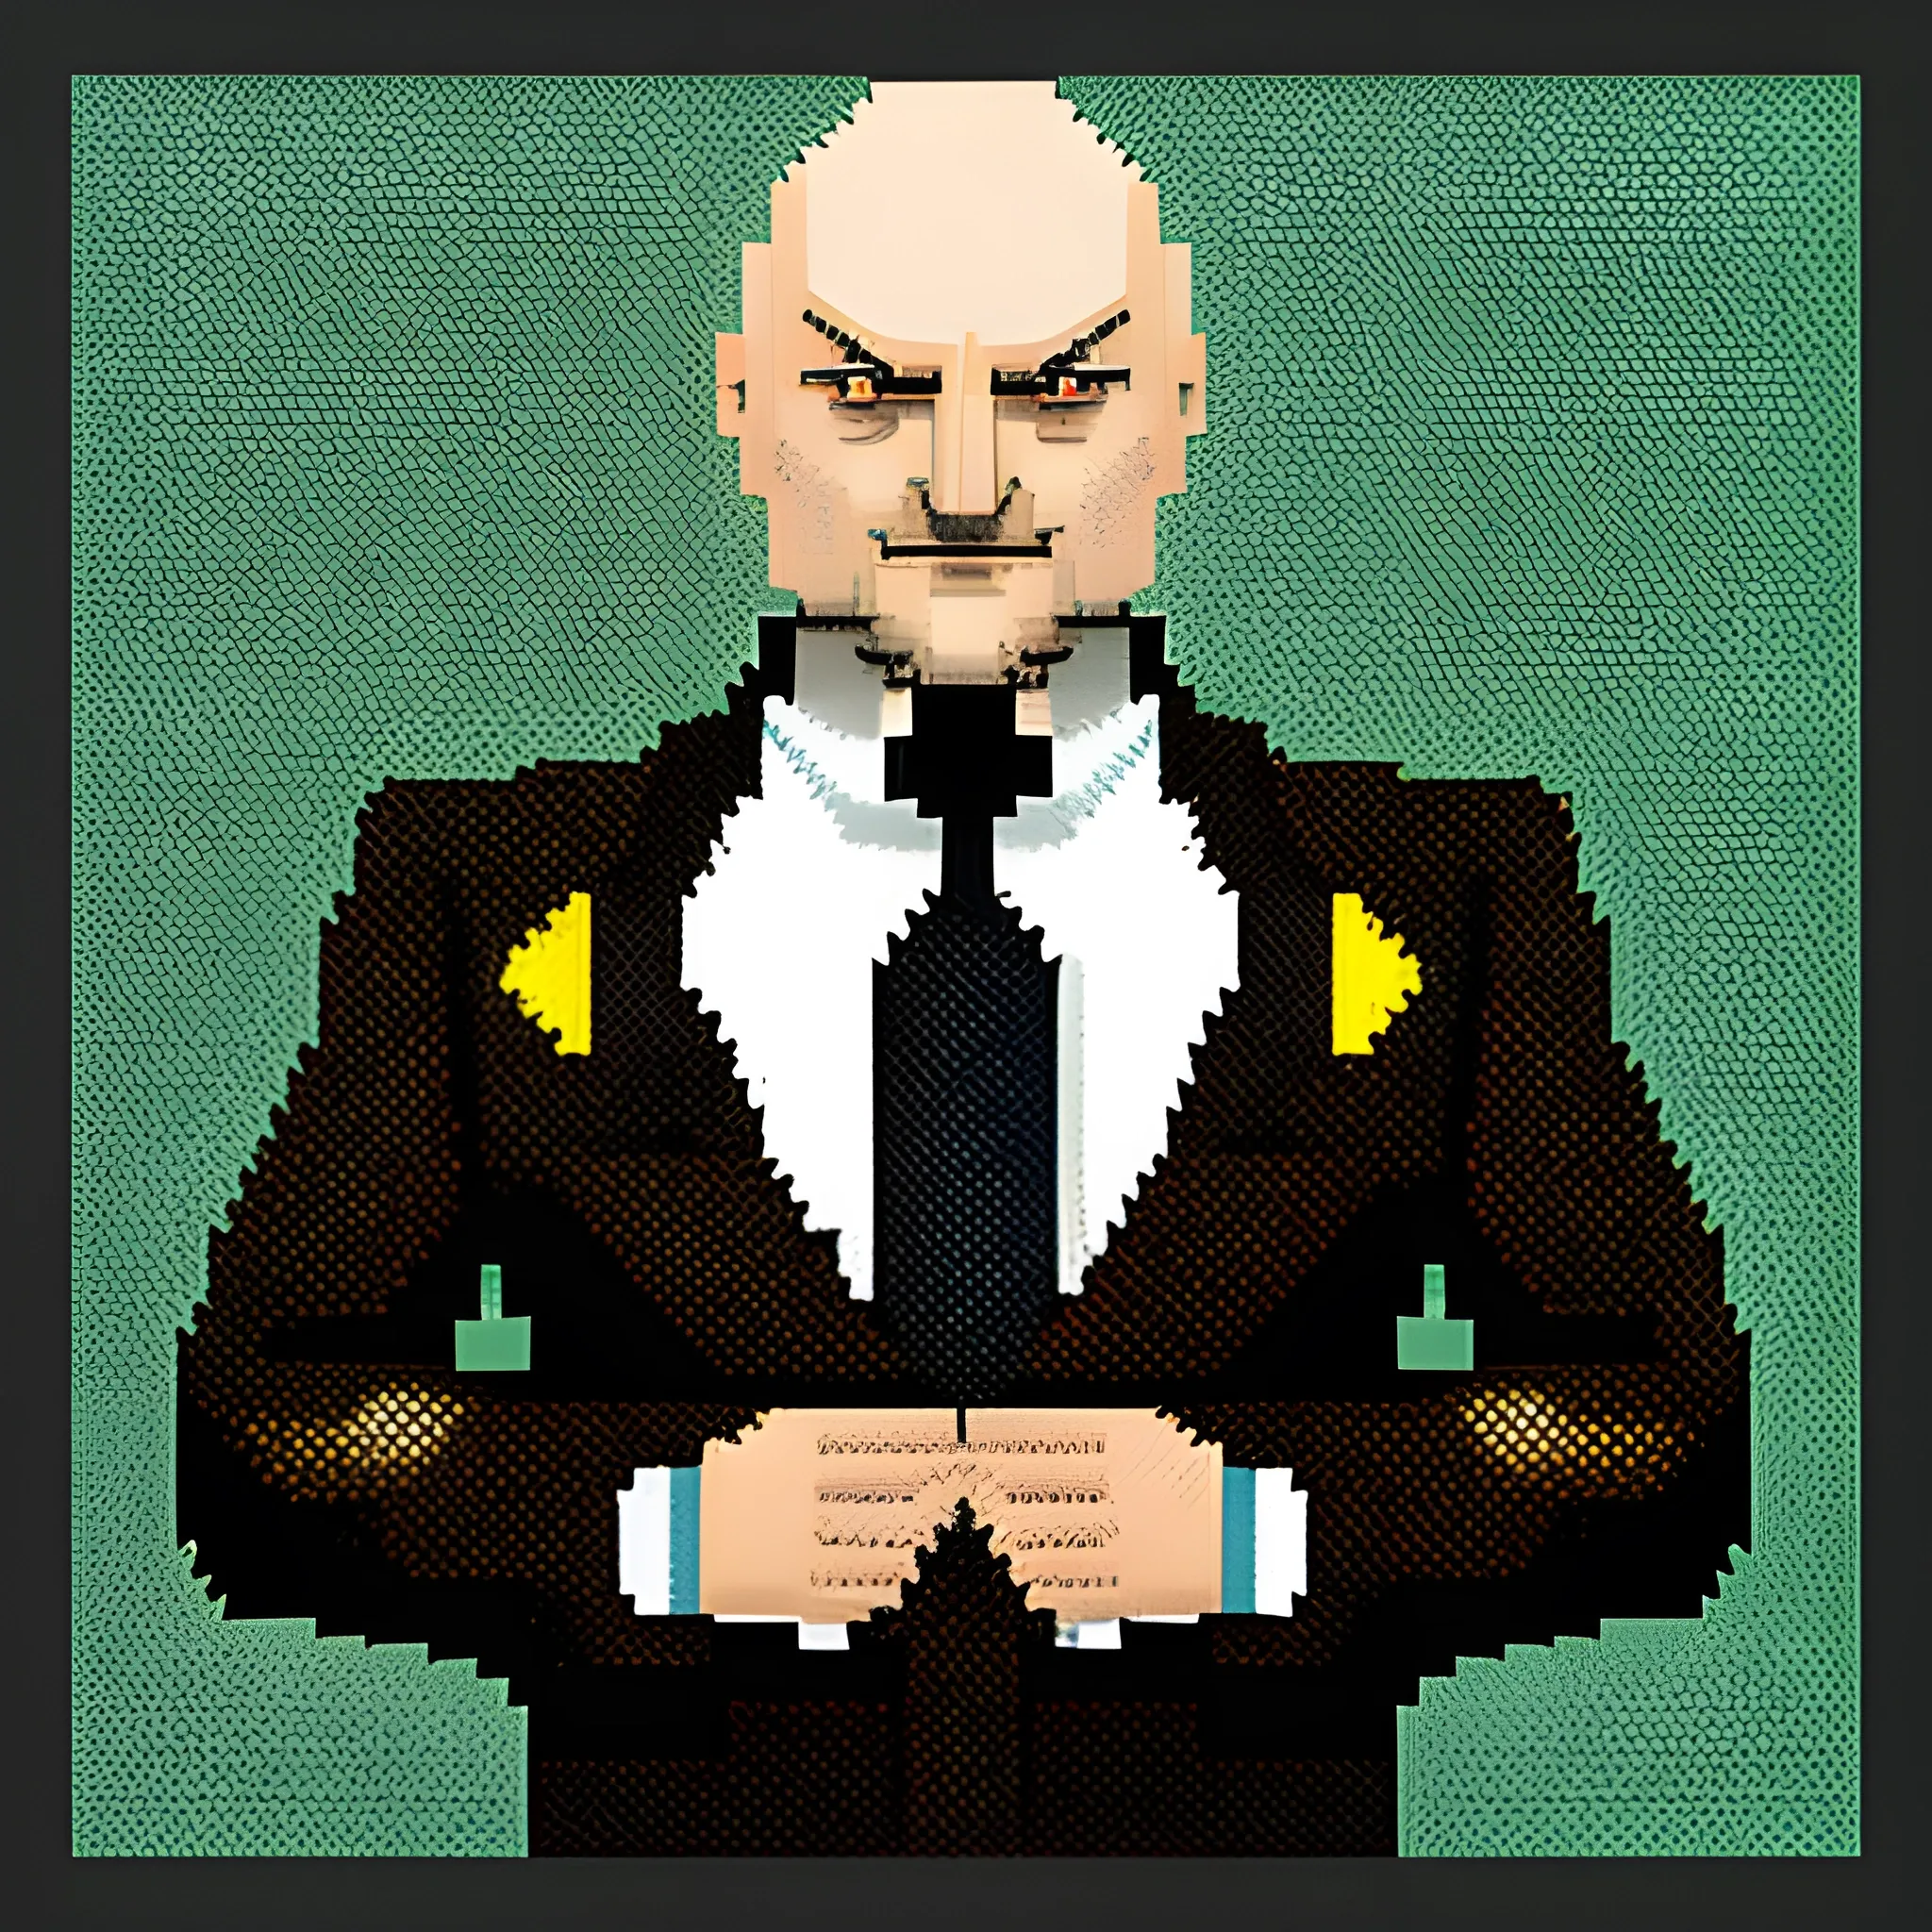 Yevgeny Prigozhin Bond Villain Pixel Art - Arthub.ai